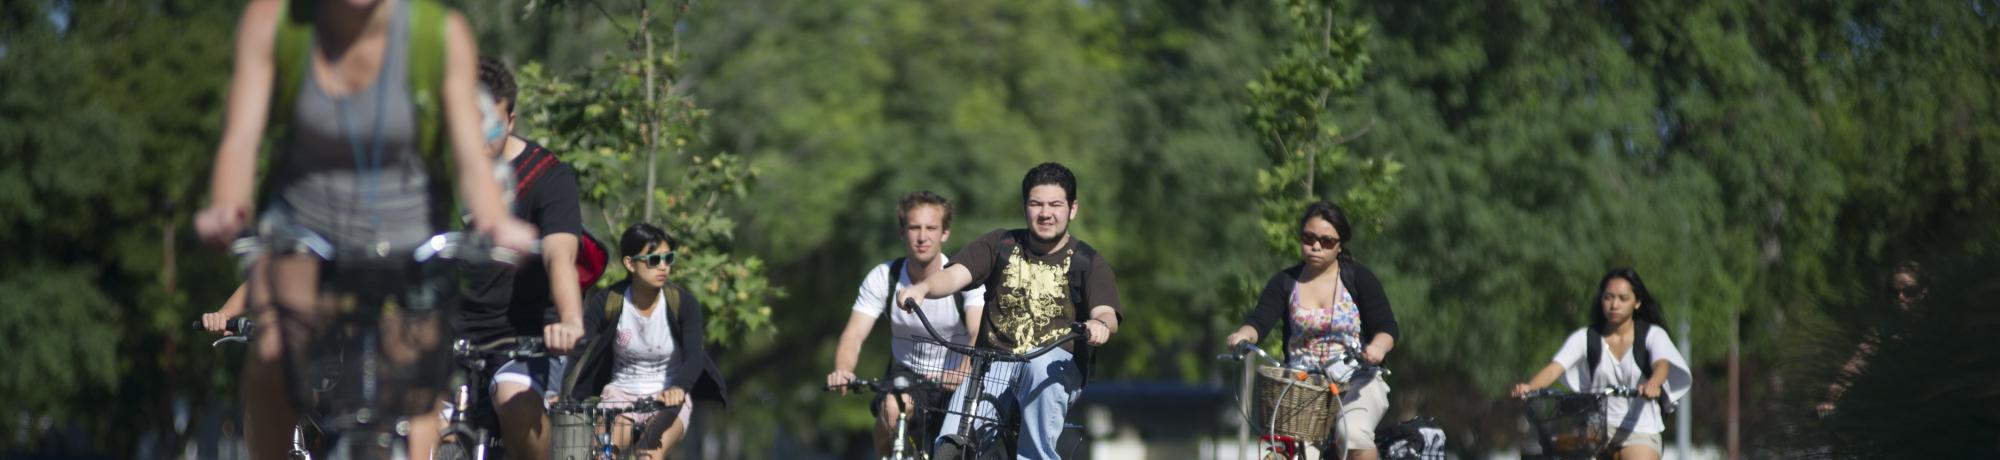 Students riding bikes